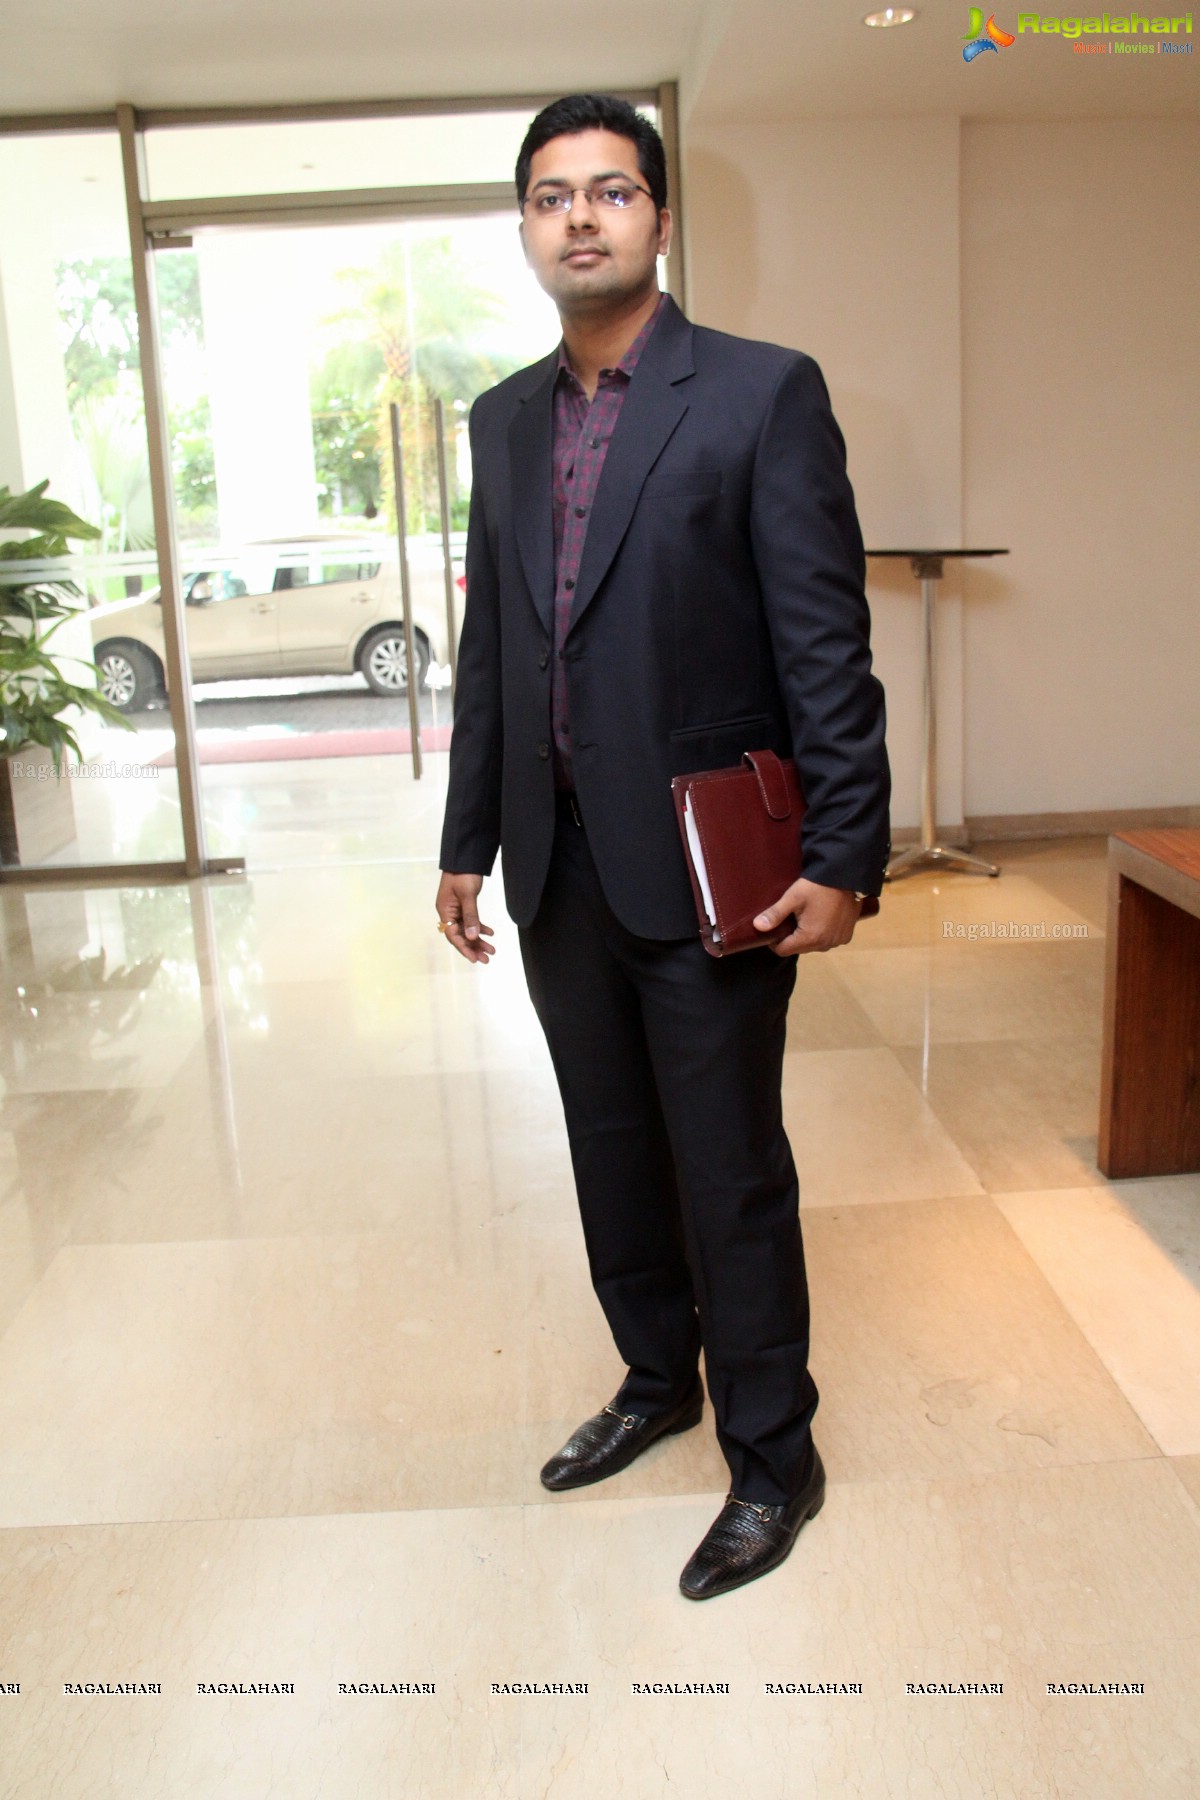 BNI Icon Meet (June 24, 2014) at Radisson Blu Plaza, Hyderabad